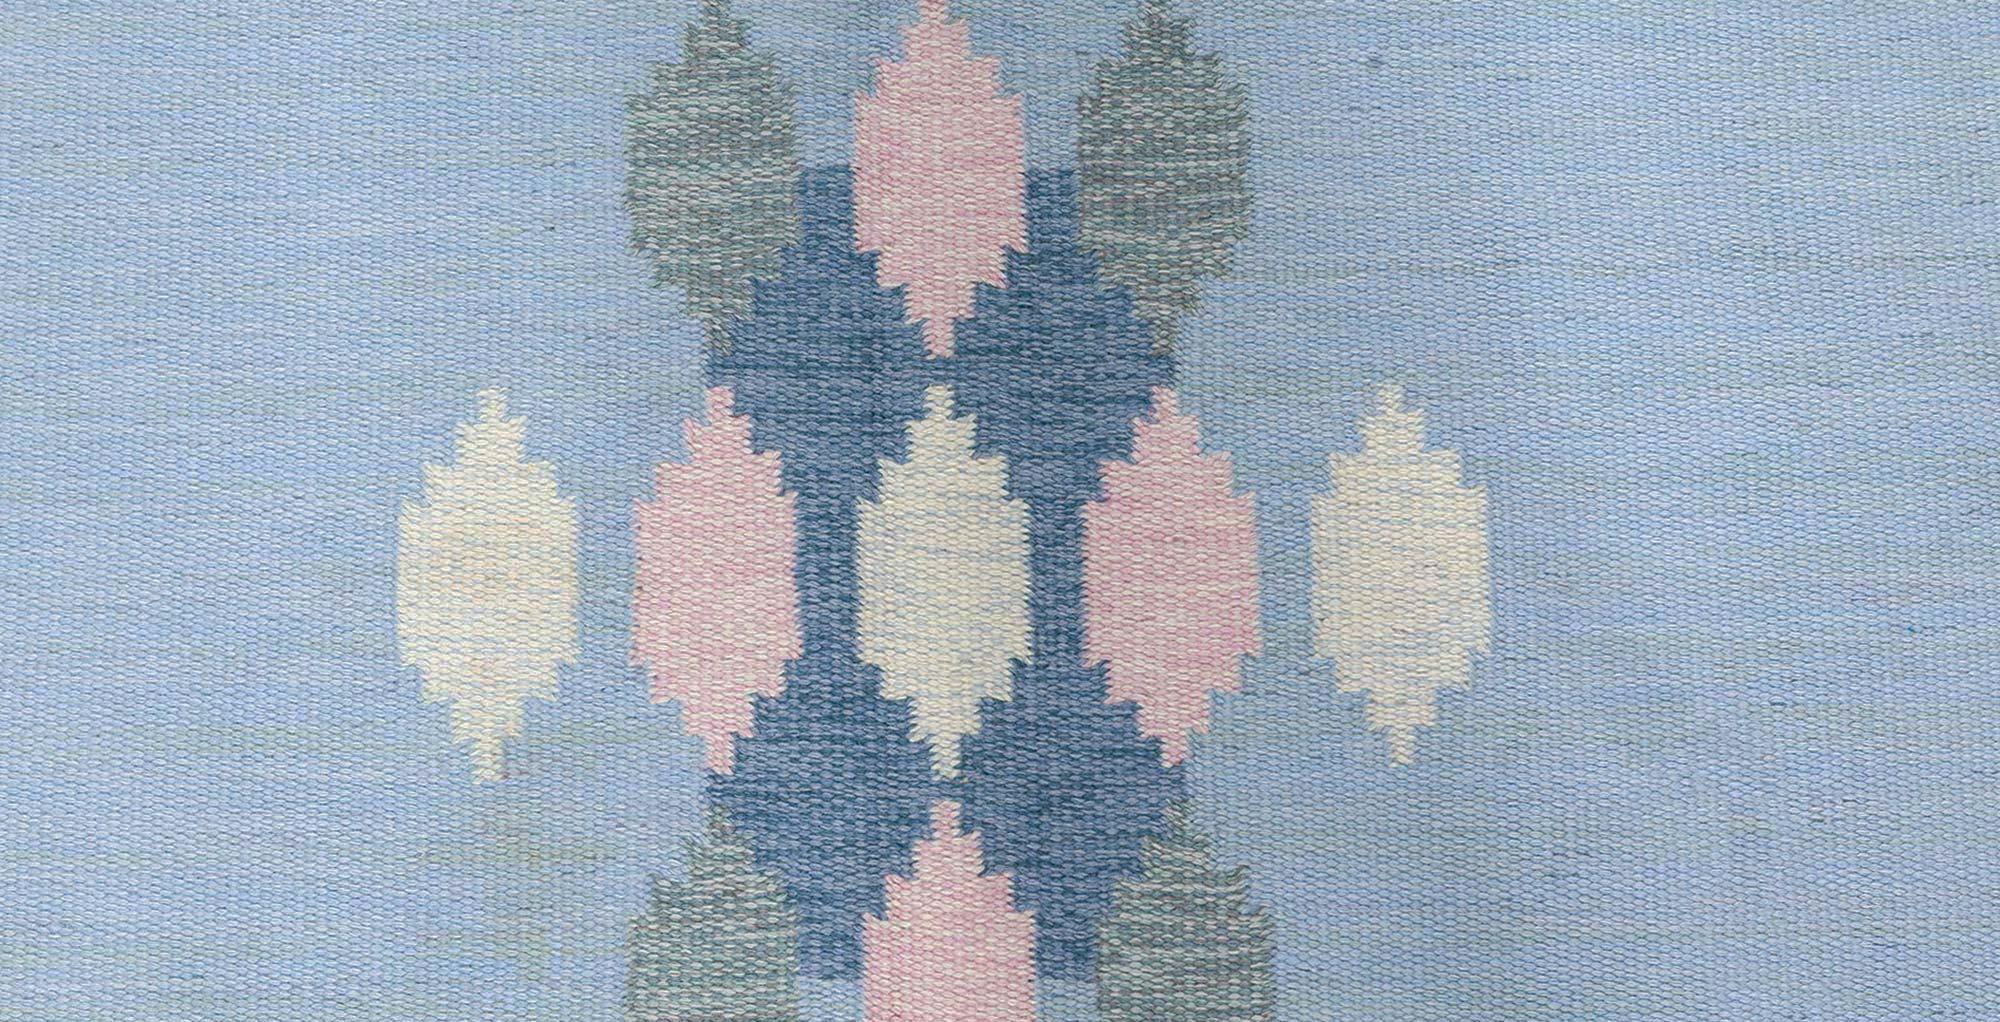 Vintage Swedish rug by Ingegerd Silow.
Size: 6'4